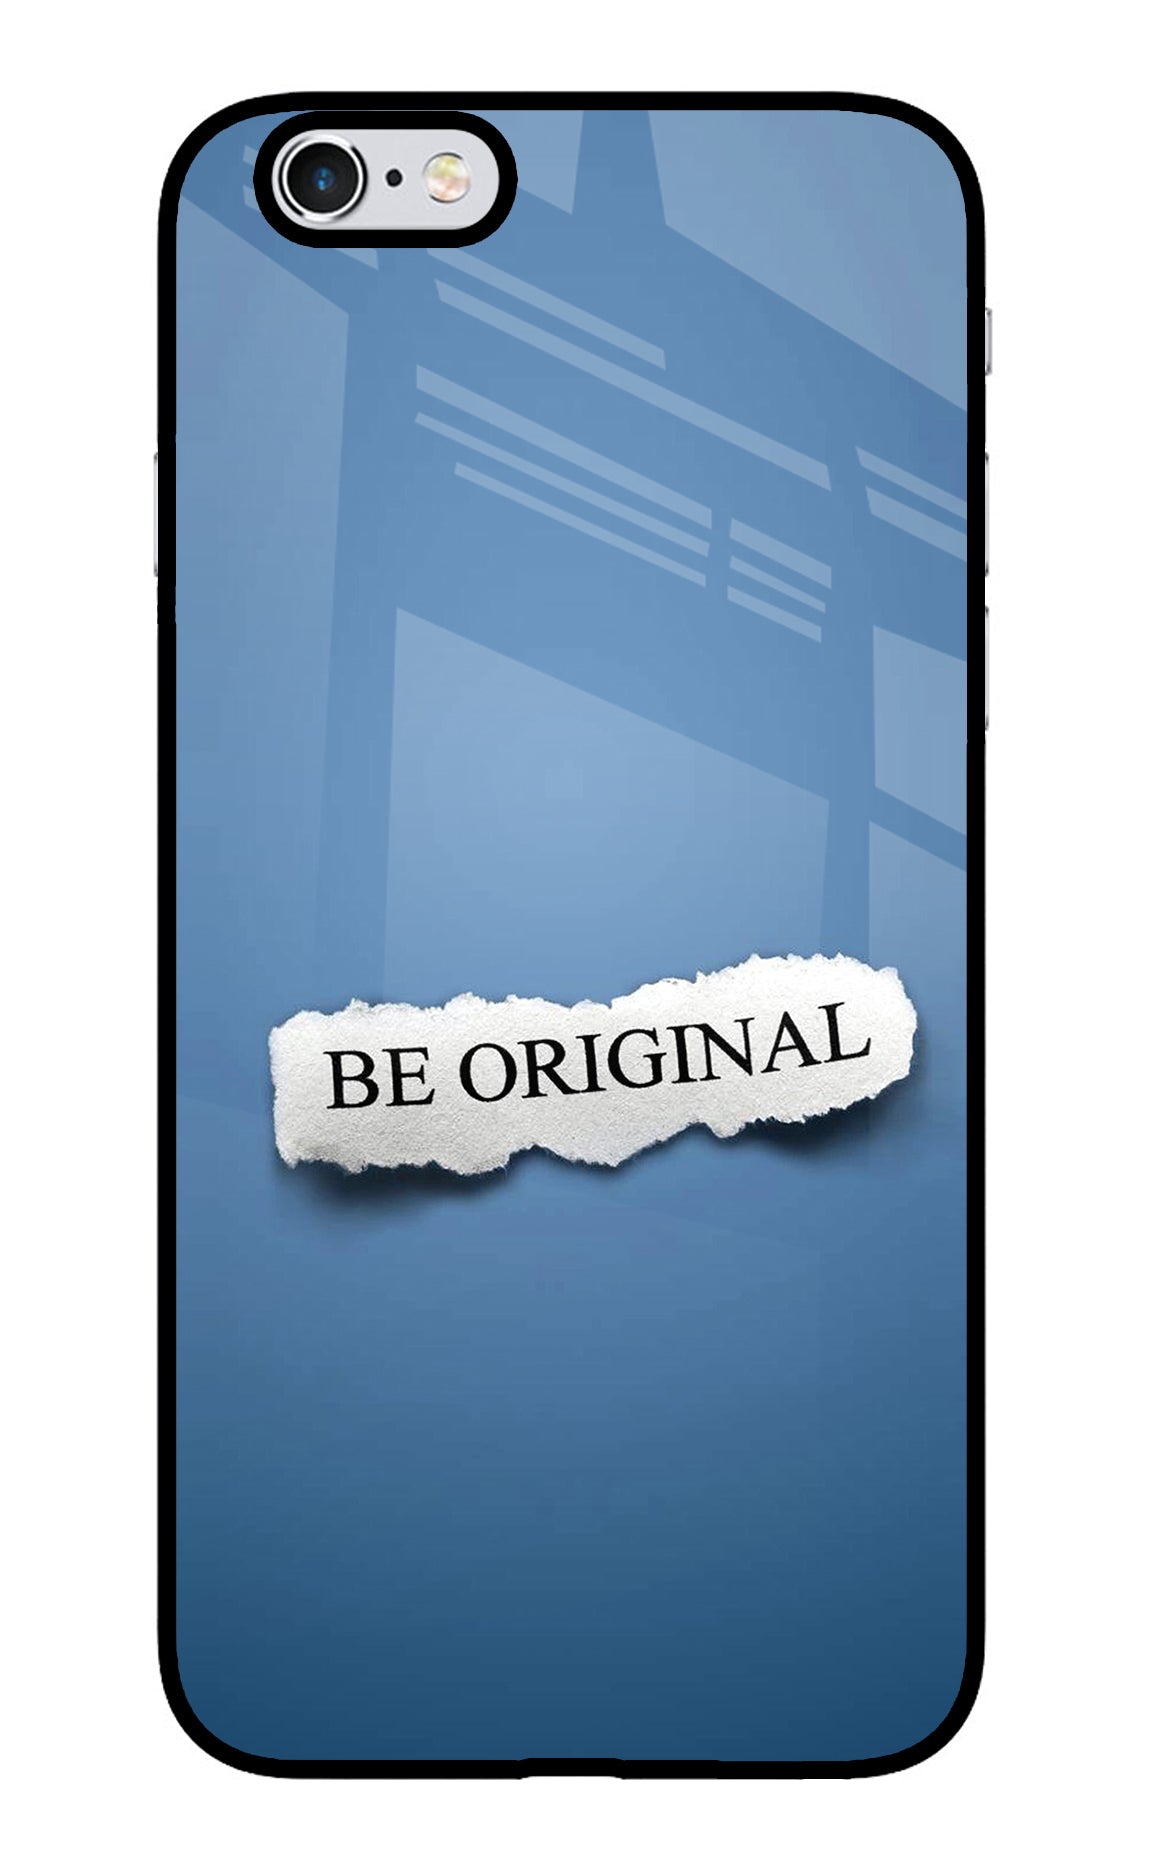 Be Original iPhone 6/6s Glass Case